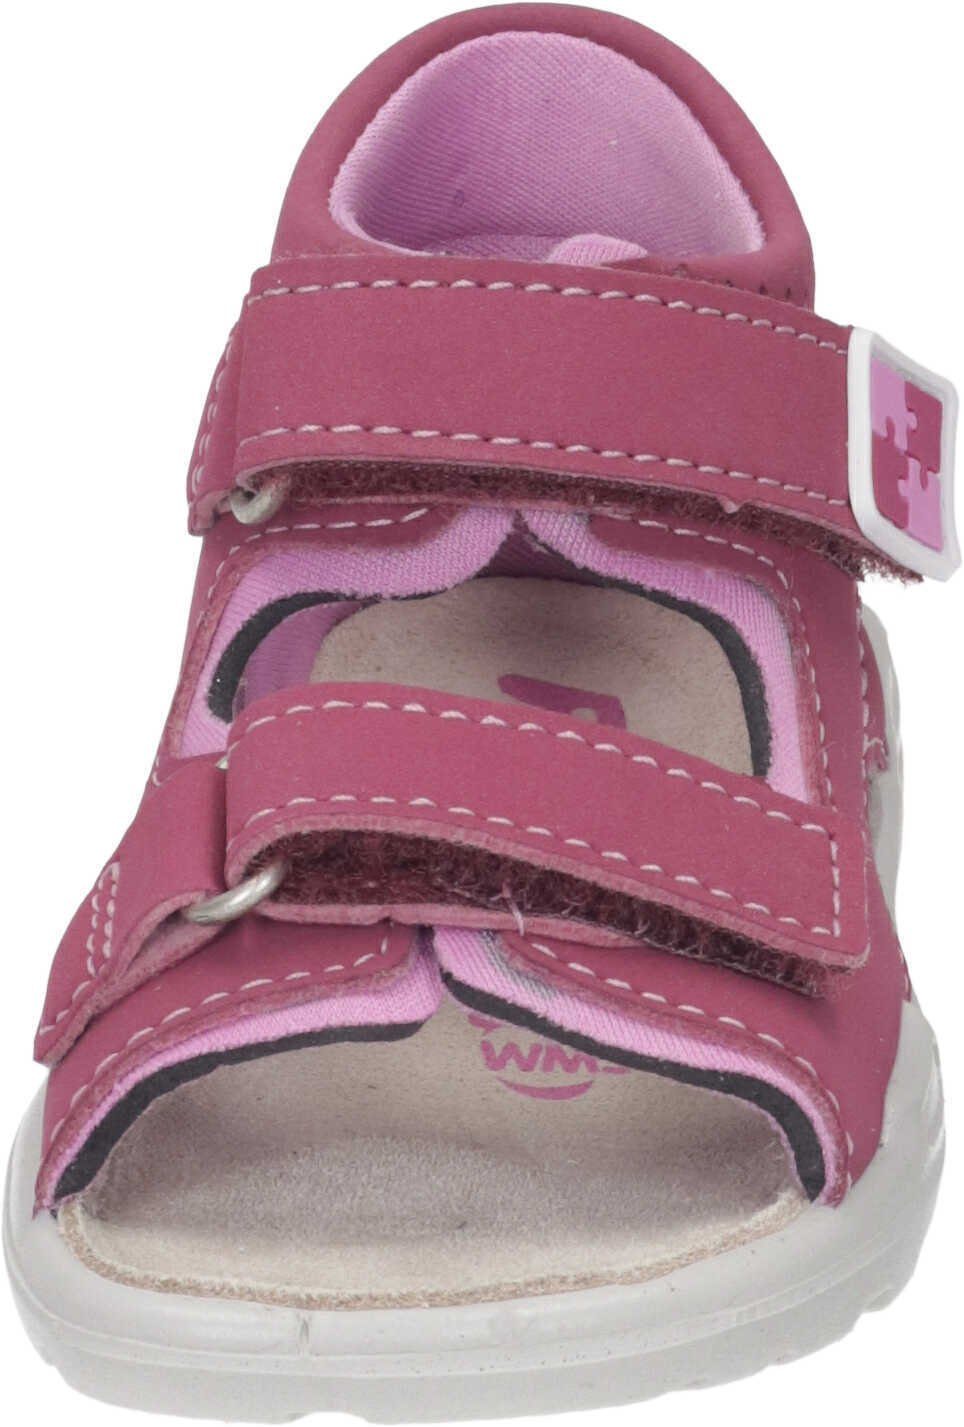 Ricosta Pepino Sandaletten Outdoorsandale Textil aus pink